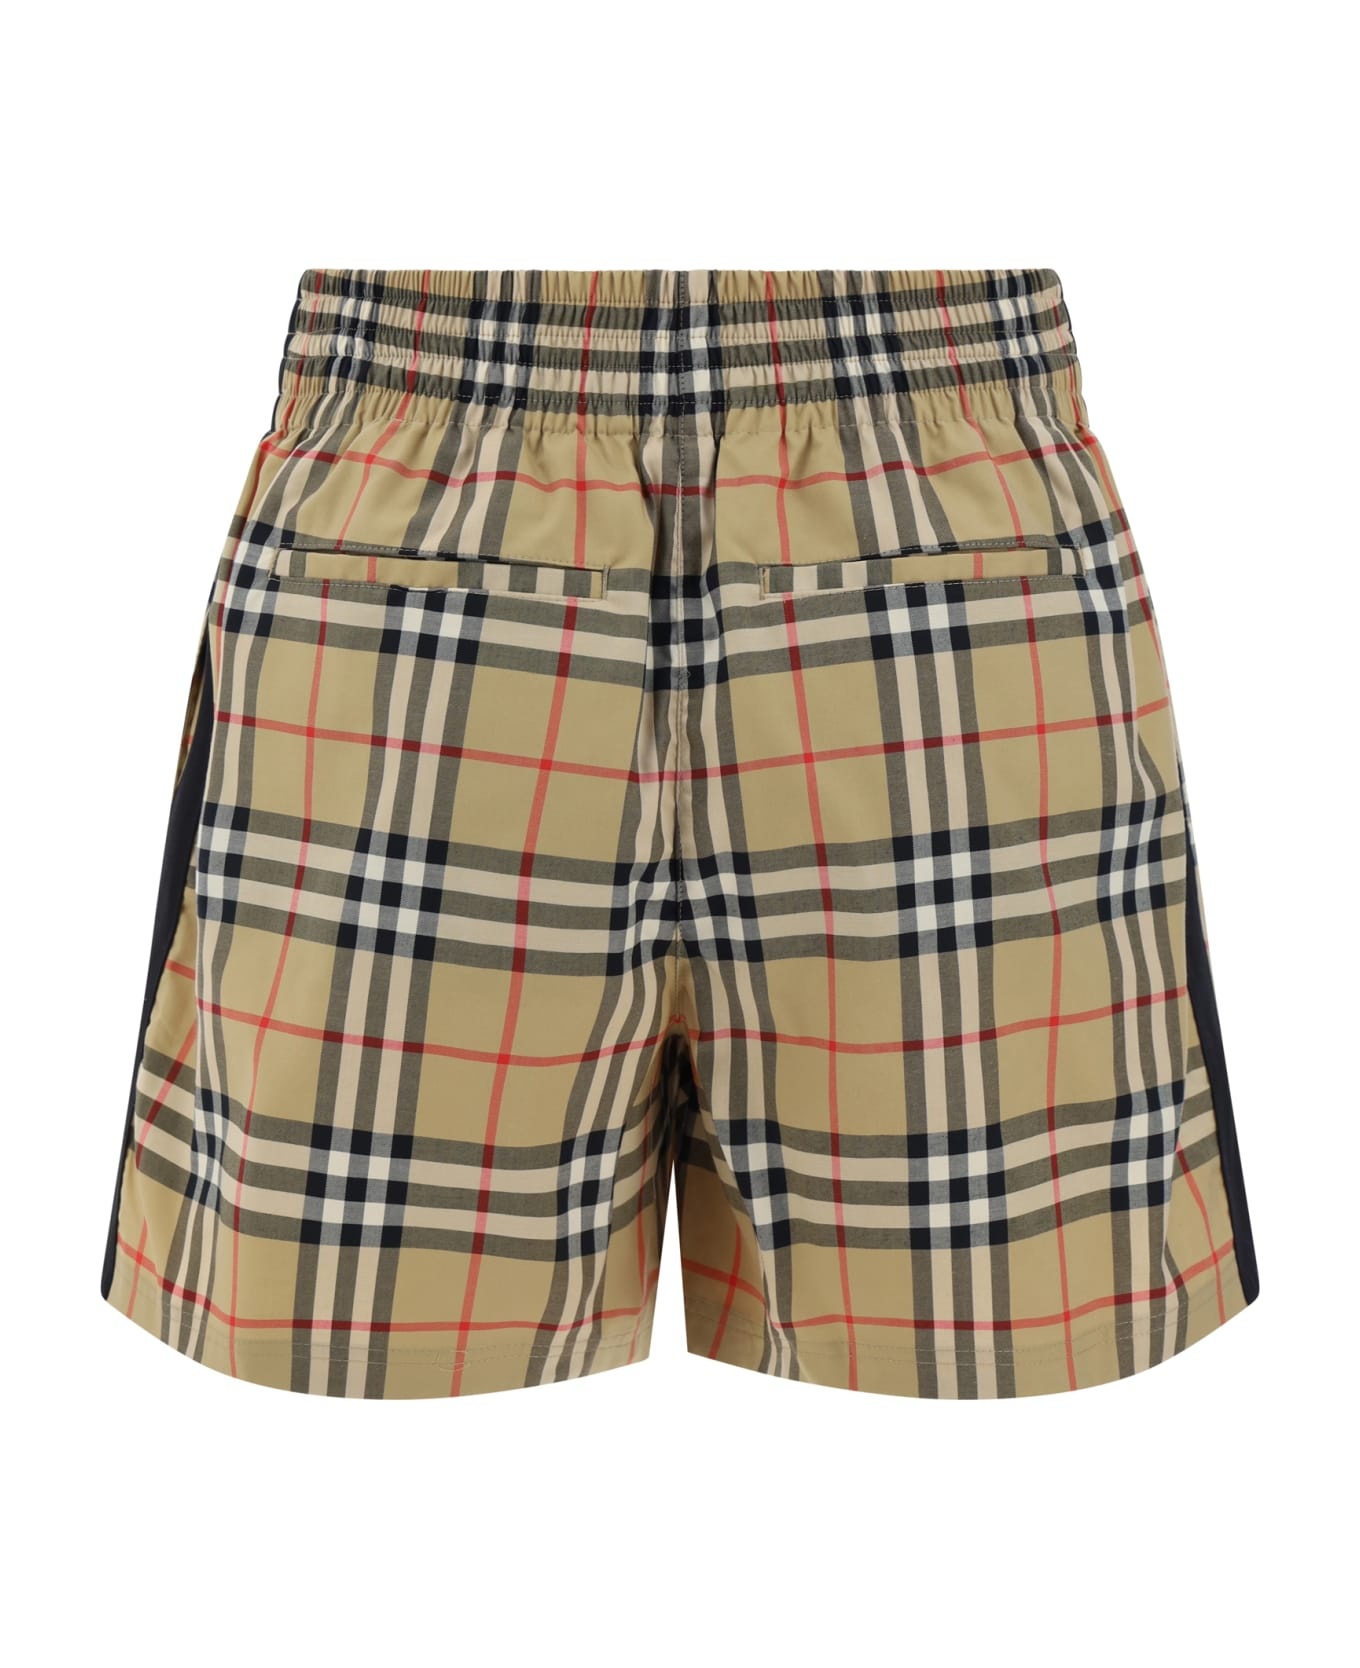 Beige Vintage Check Cotton Bermuda Shorts - 2